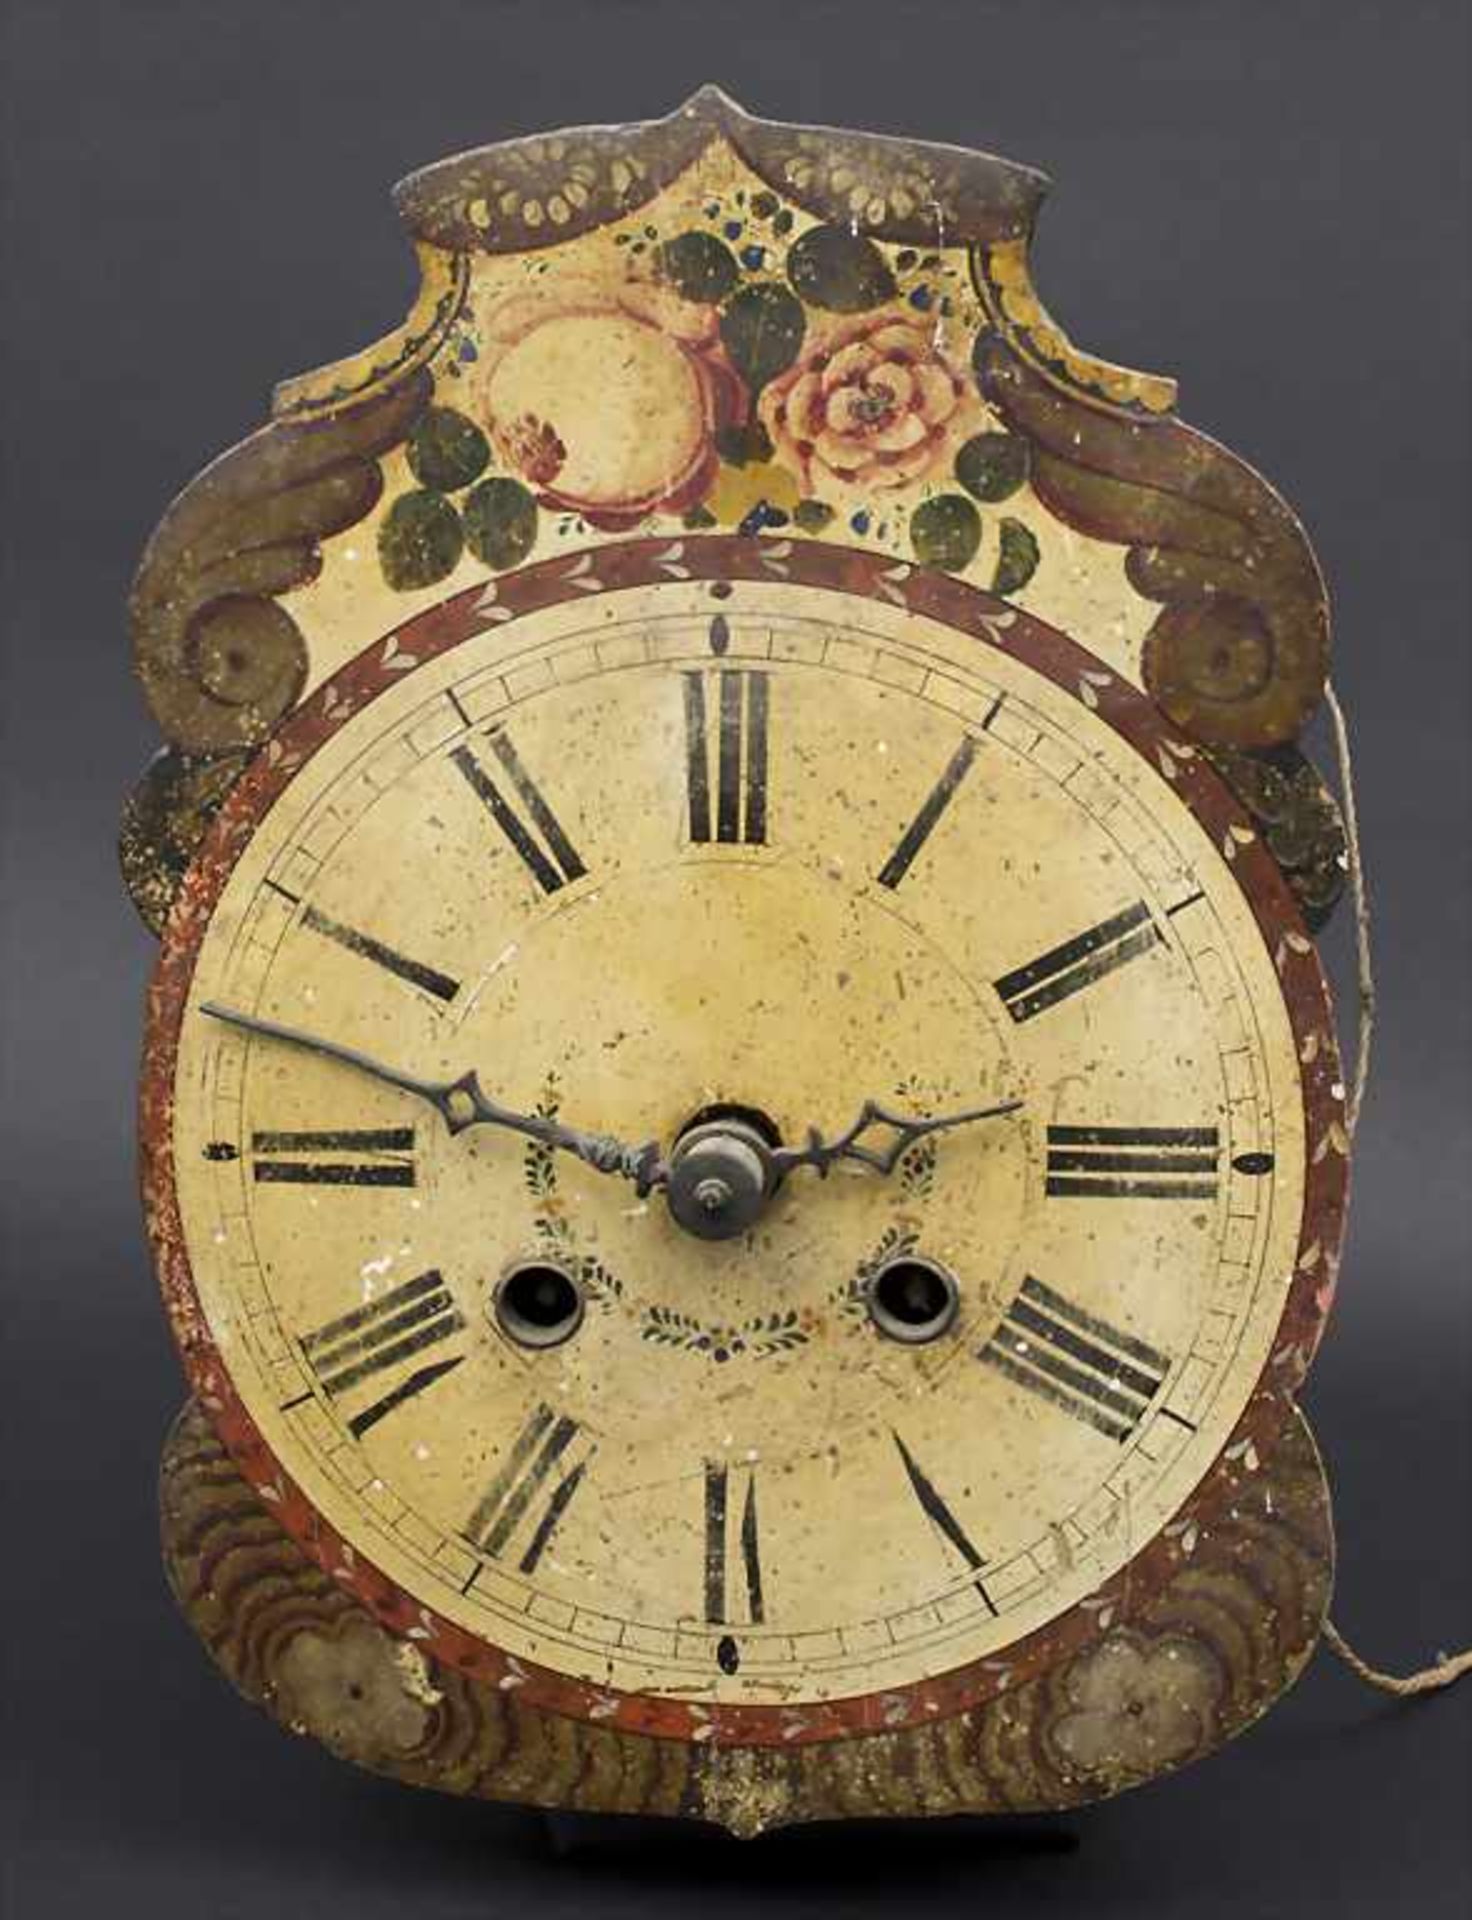 Schwarzwalduhr Lackschilduhr / A black forest clock, 19. Jh.Material: Holz, polychrom bemalt,Werk: